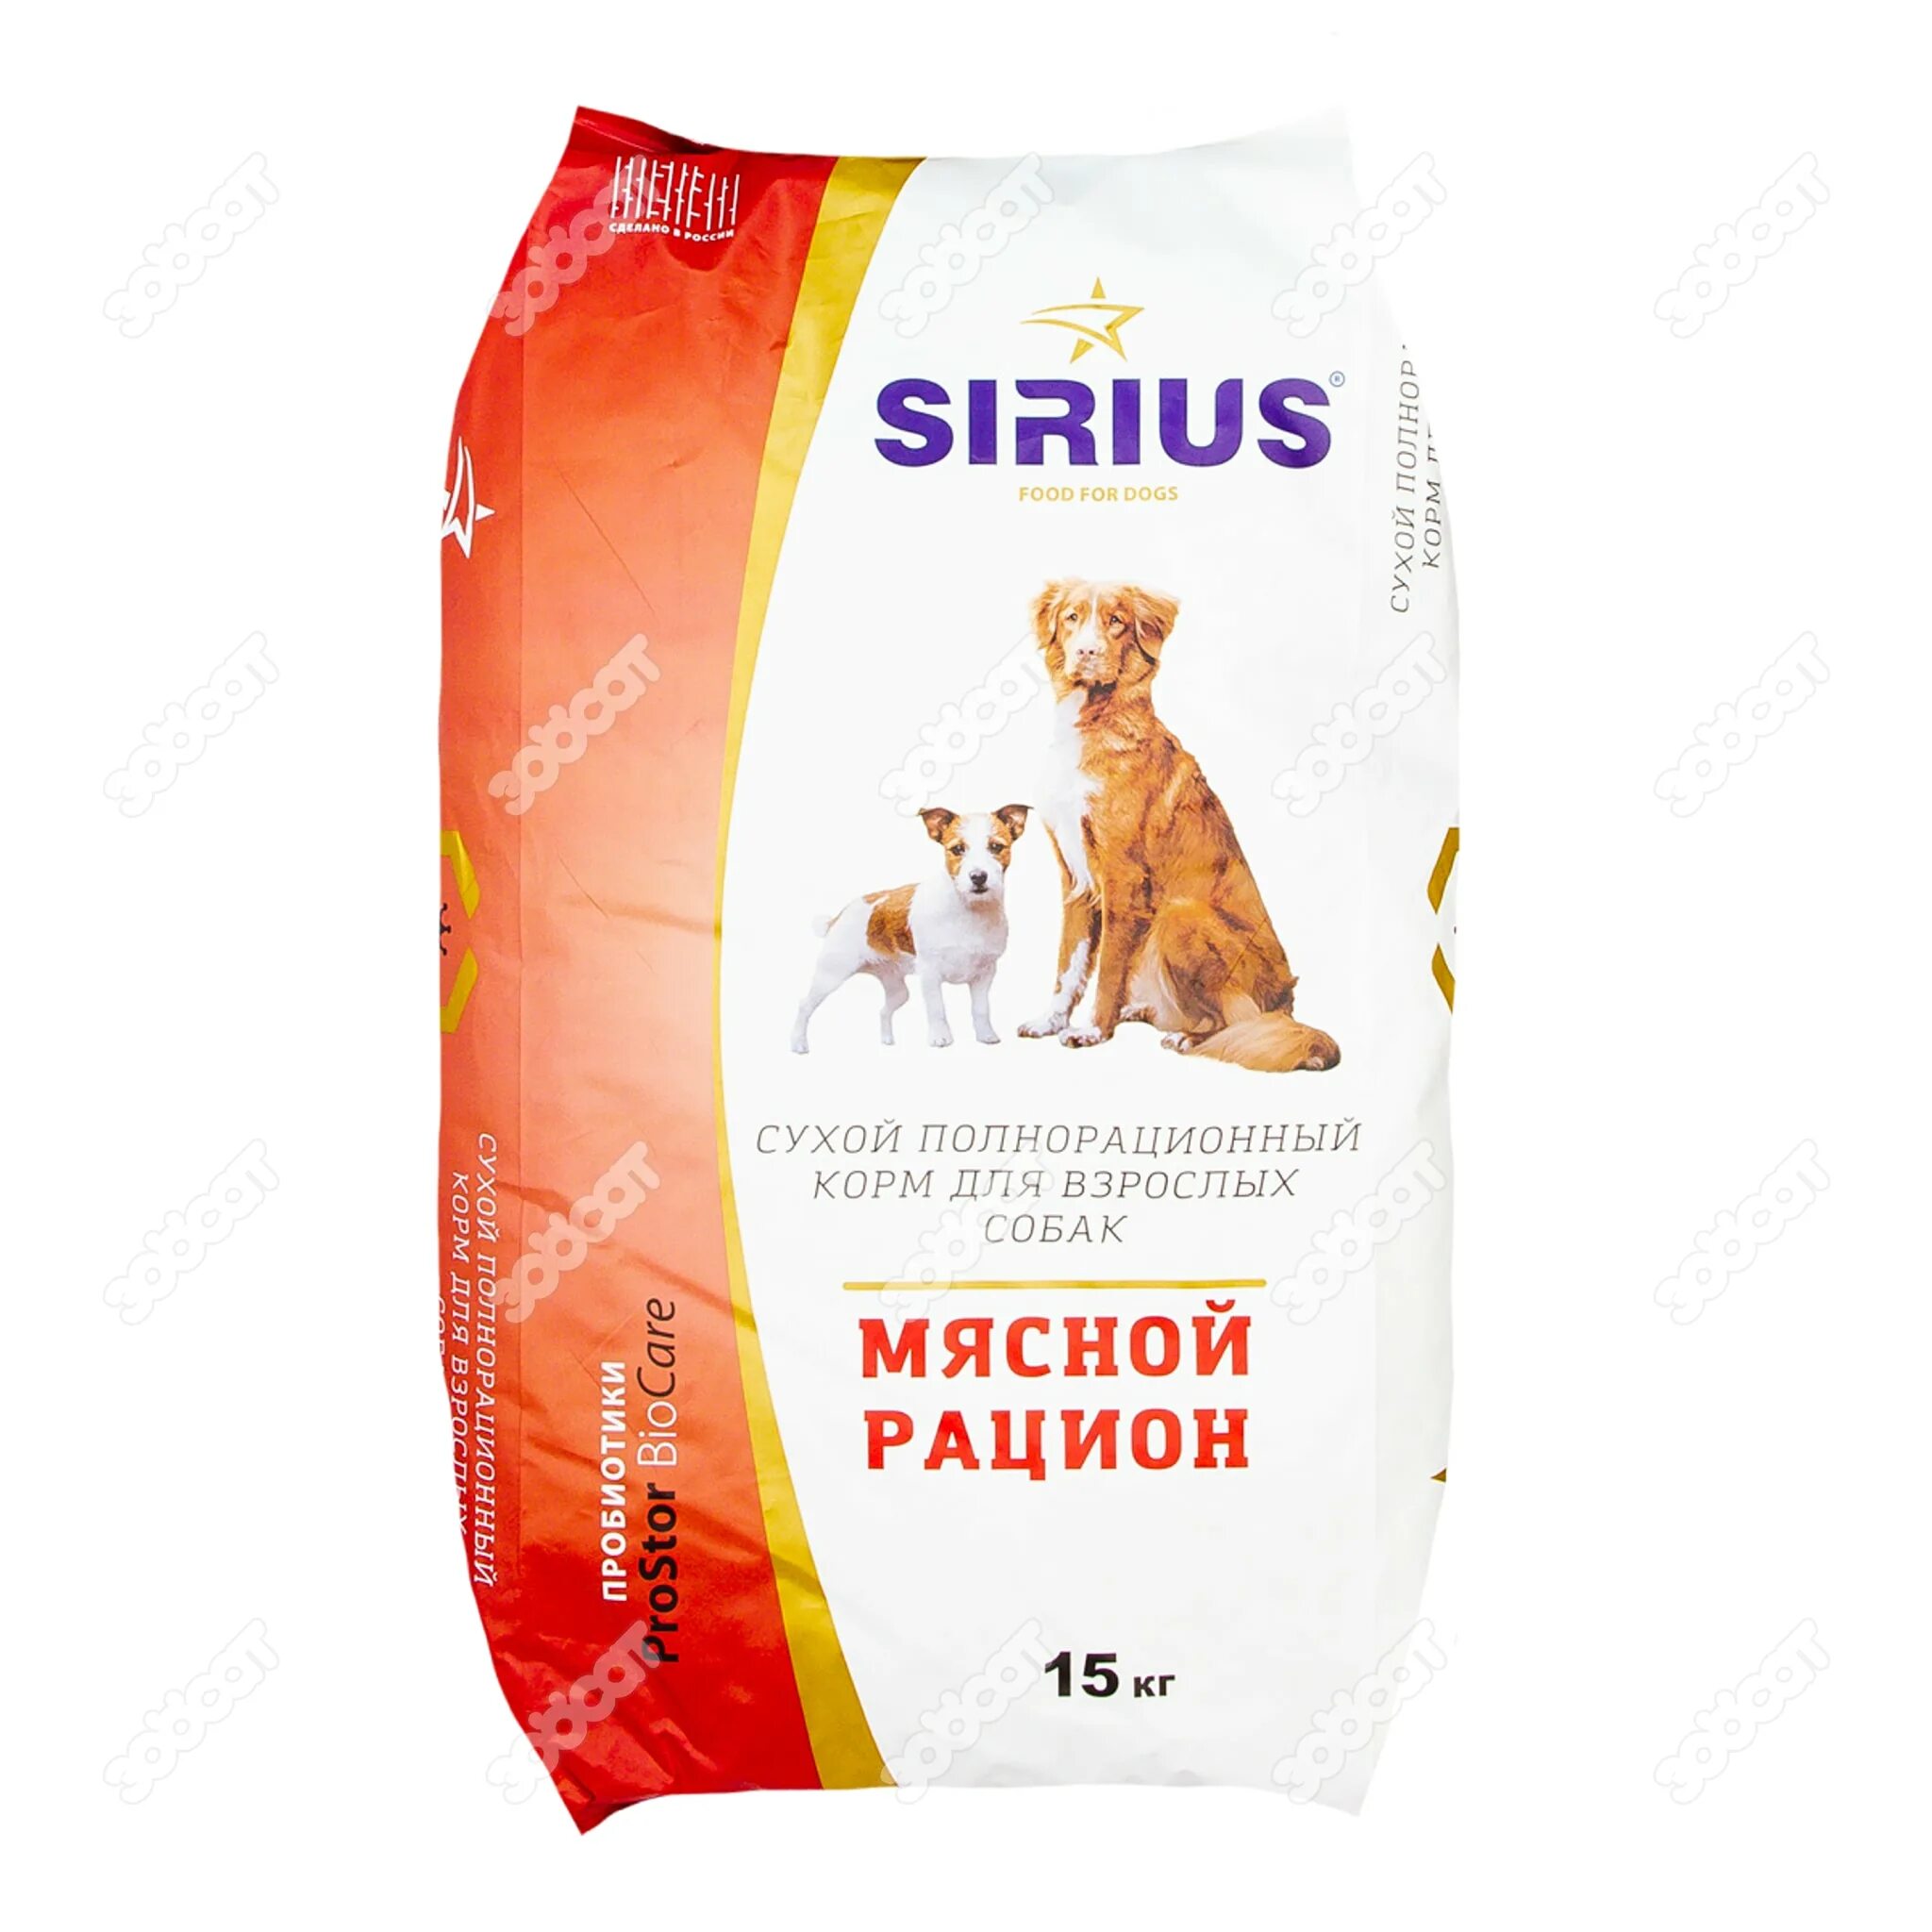 Корм для собак сухой 14 кг. Сириус корм для собак 15 кг. Sirius корм для собак 15кг. Корм Сириус для щенков 15кг. Сириус корм для собак 20 кг состав.